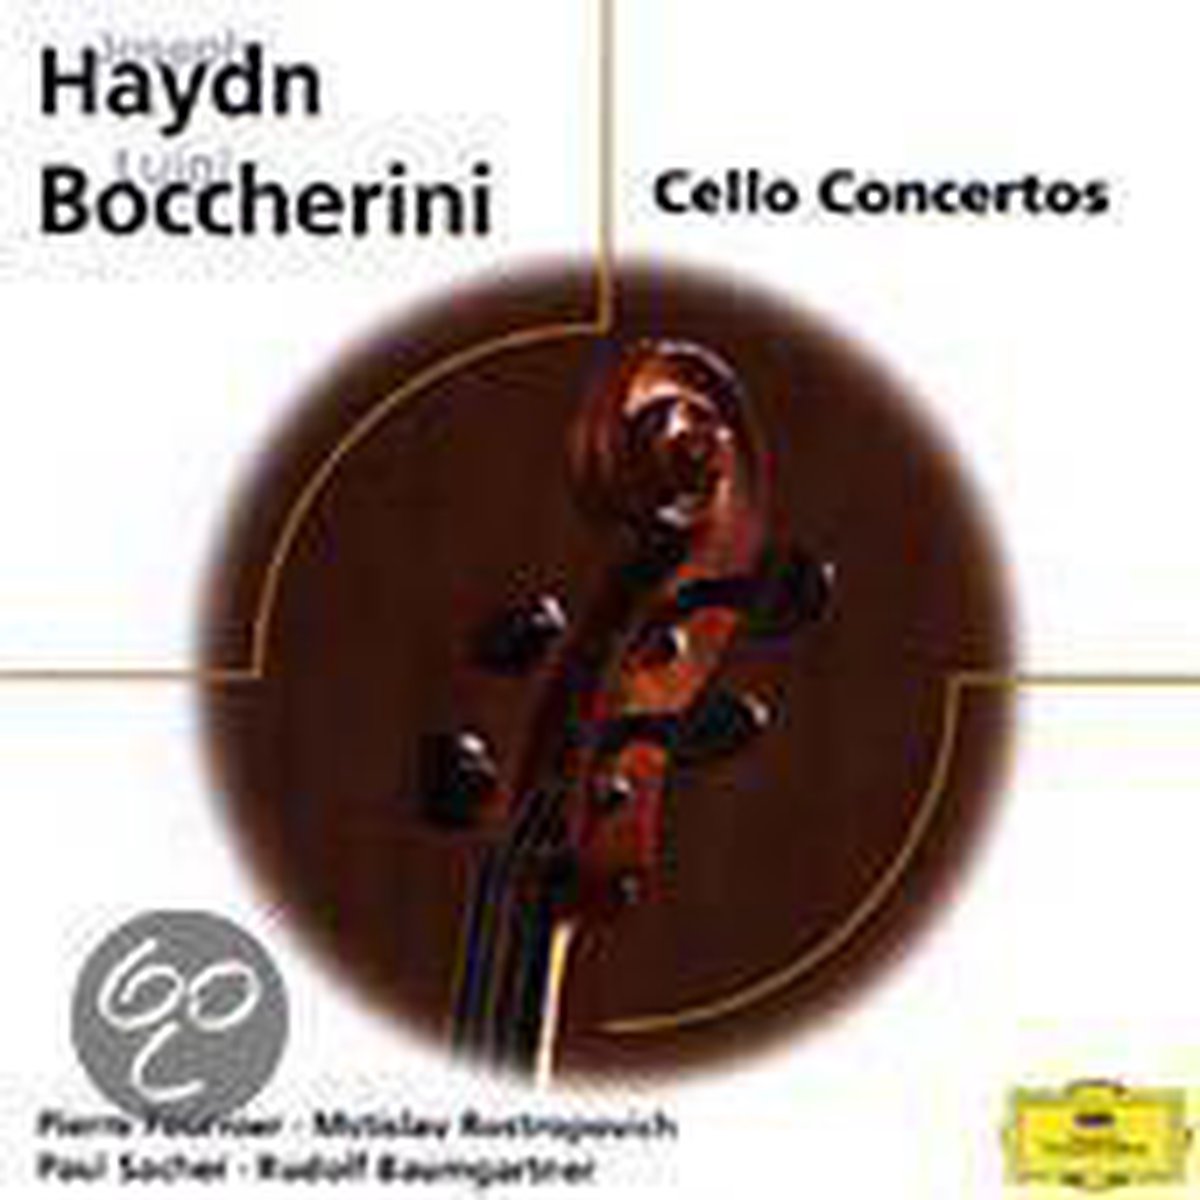 Haydn, Boccherini: Cello Concertos - Pierre Fournier